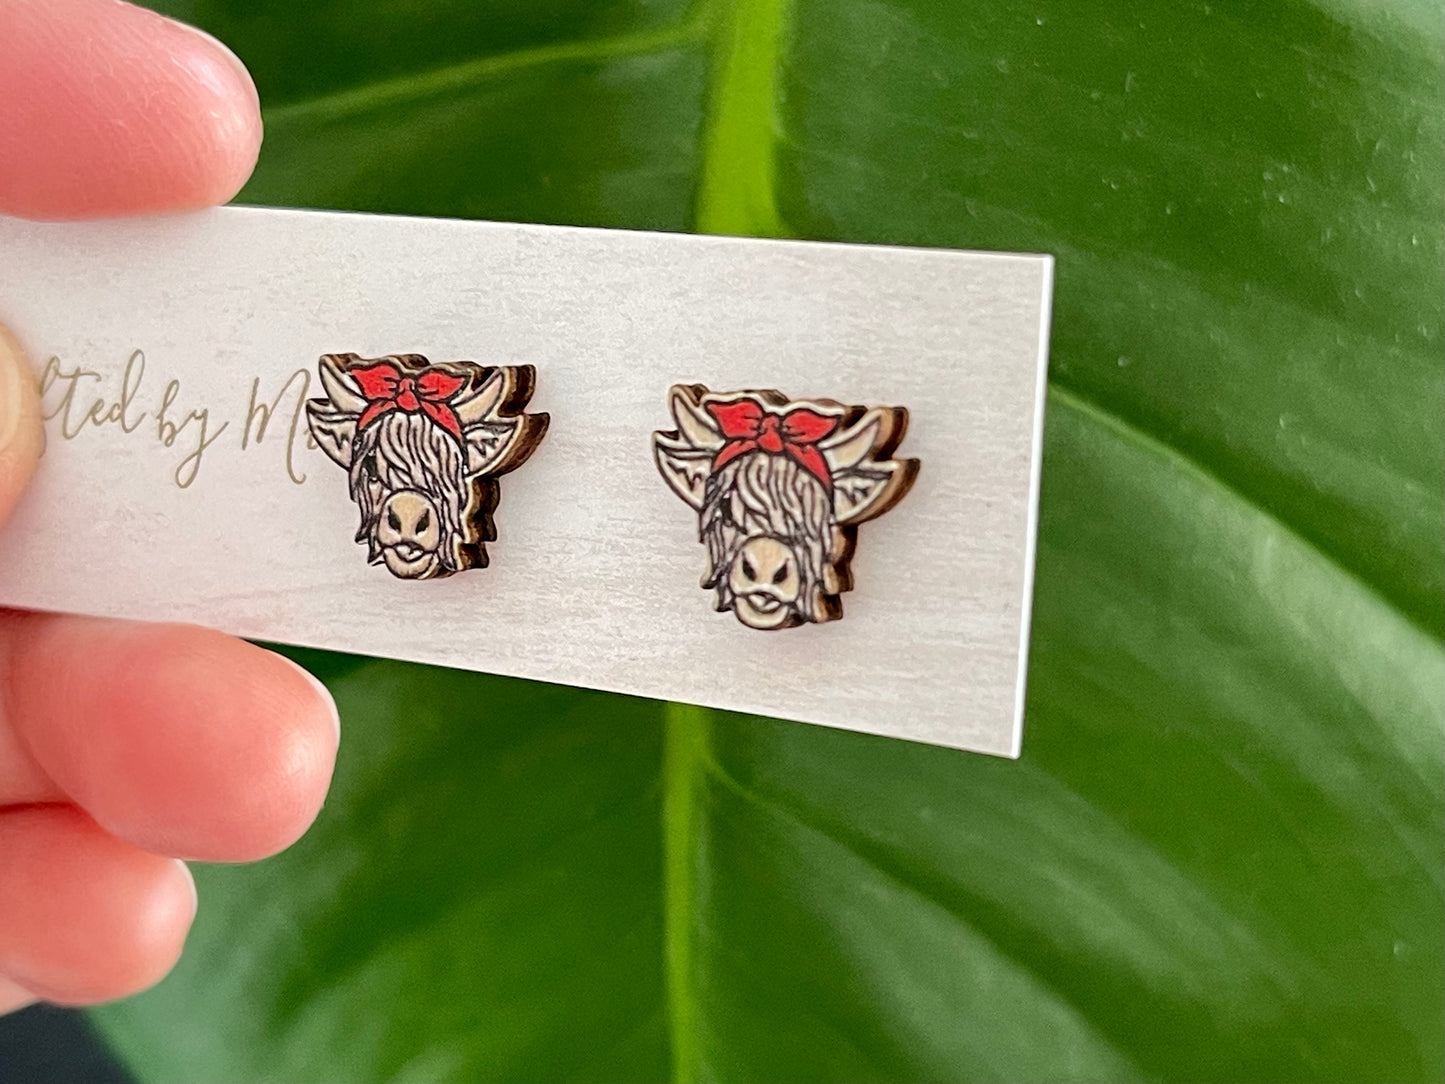 Highland Cow Stud Earrings